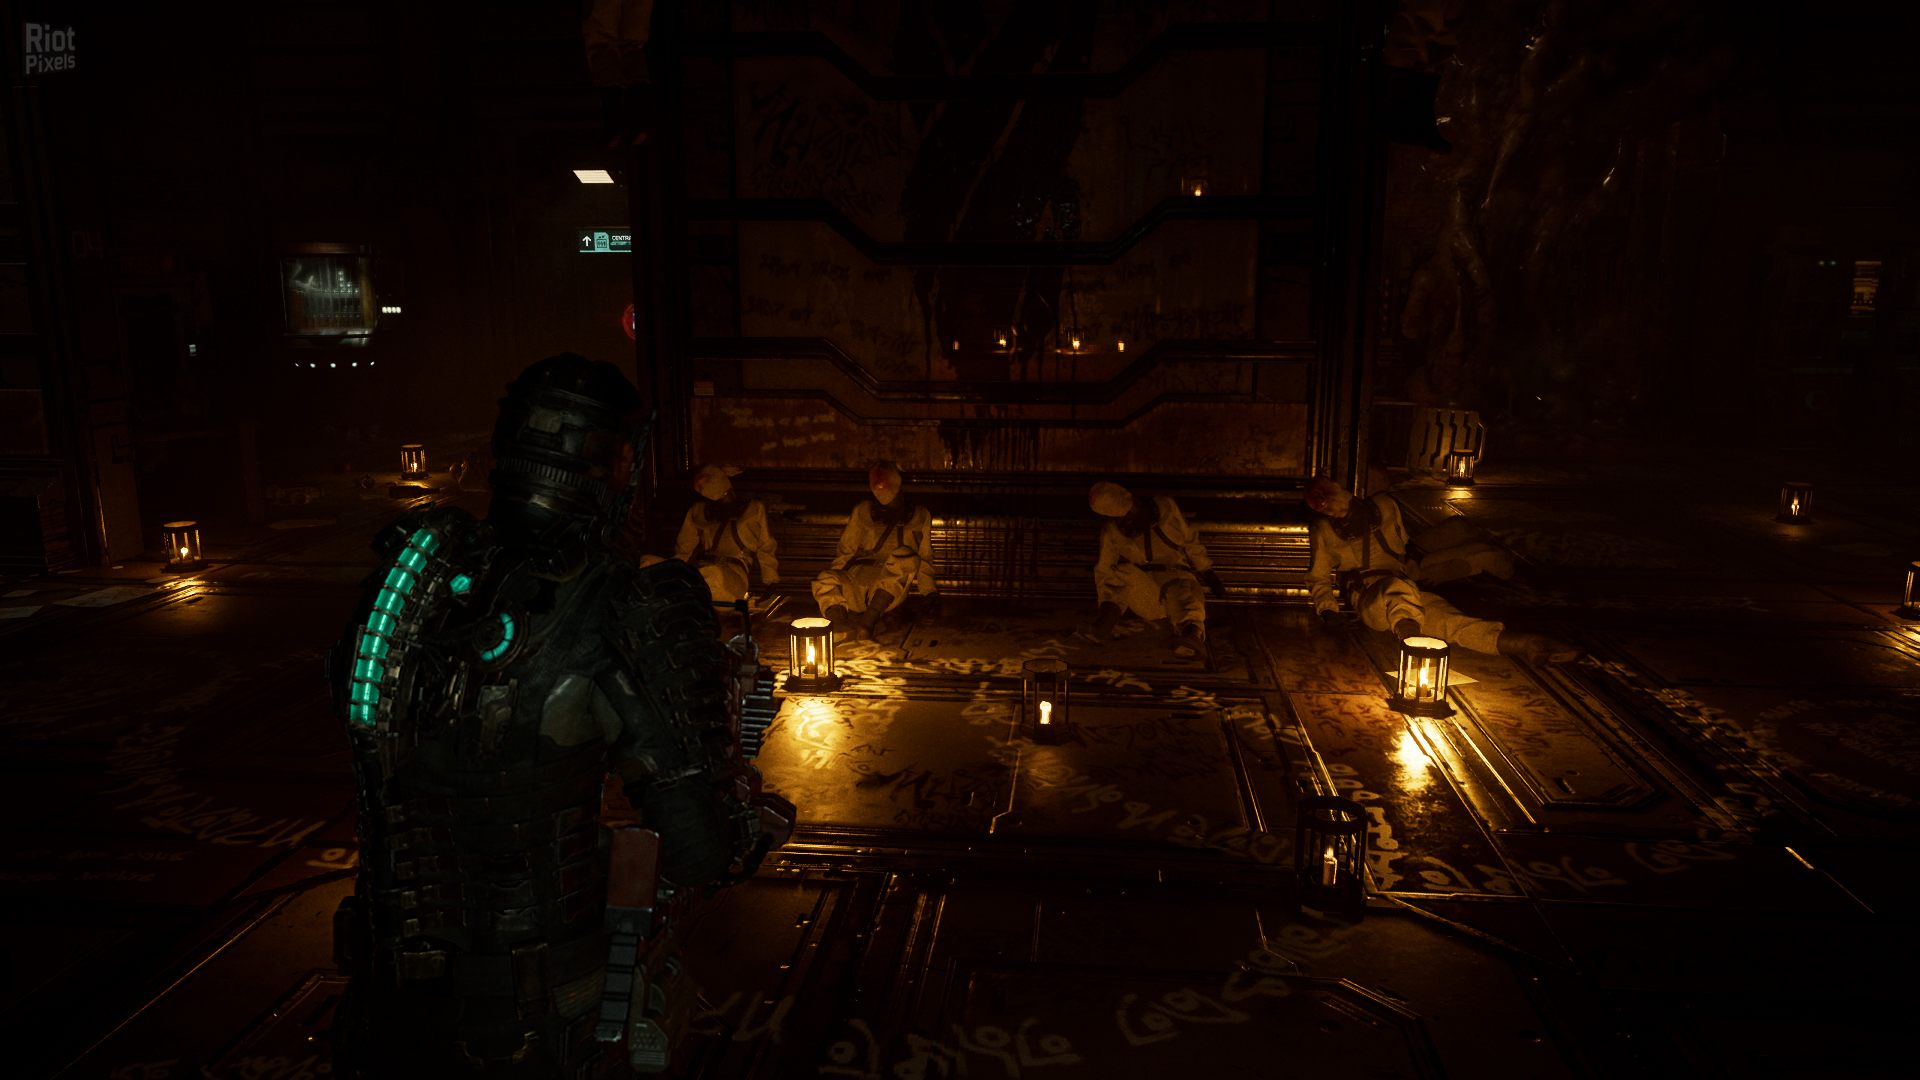 Dead Space 3 Screenshots - Image #11127